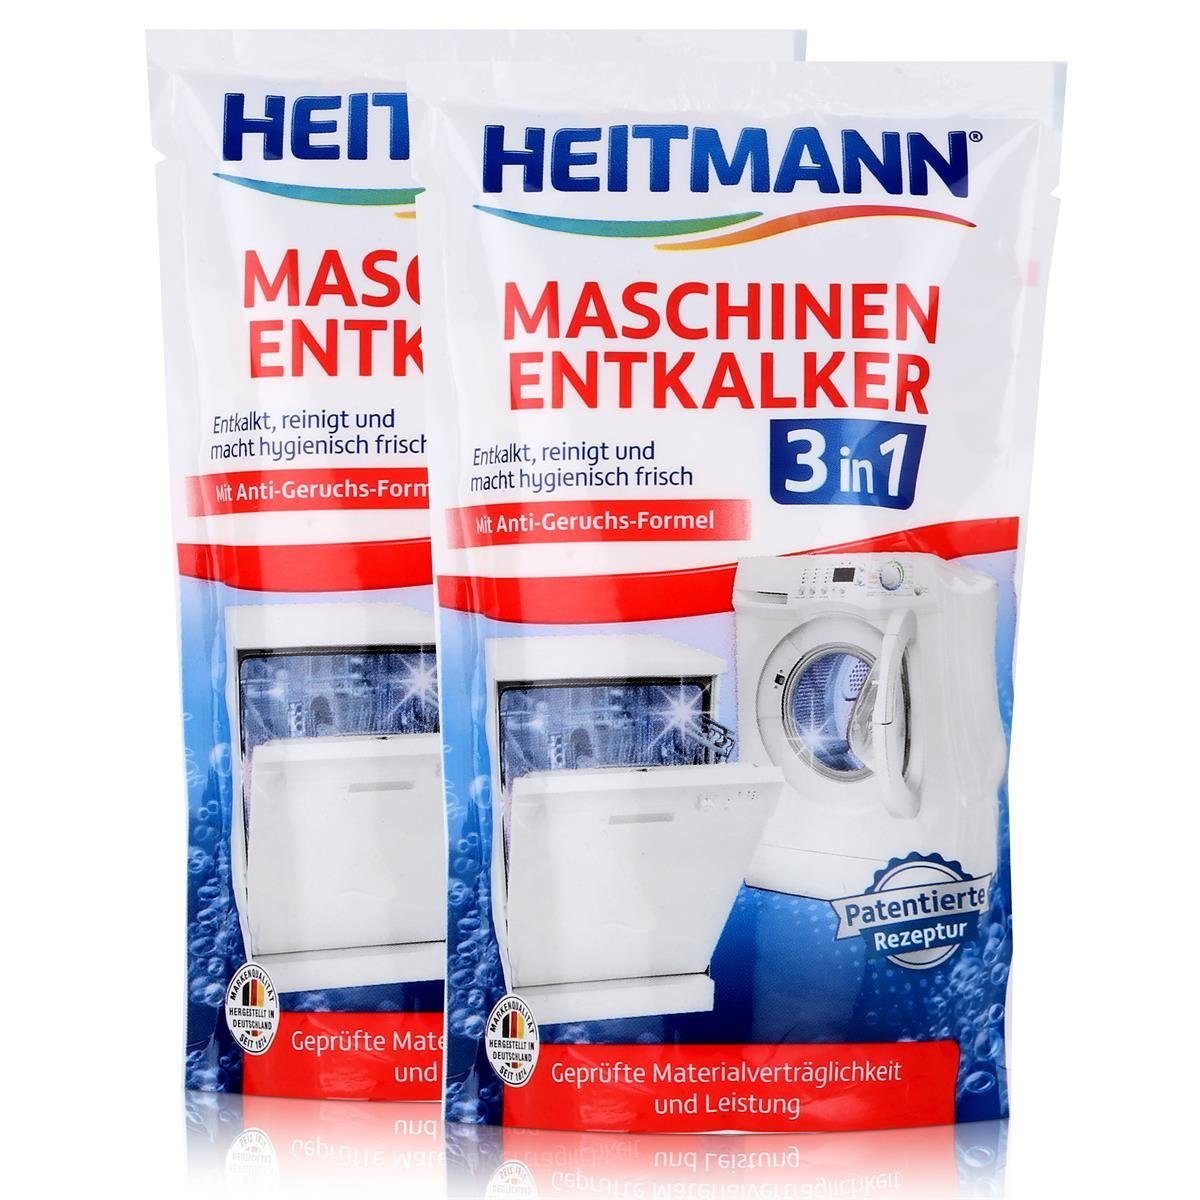 HEITMANN Heitmann - Geschirrspüler Spezialwaschmittel Entkalker Waschmaschinen und 175g Maschinen